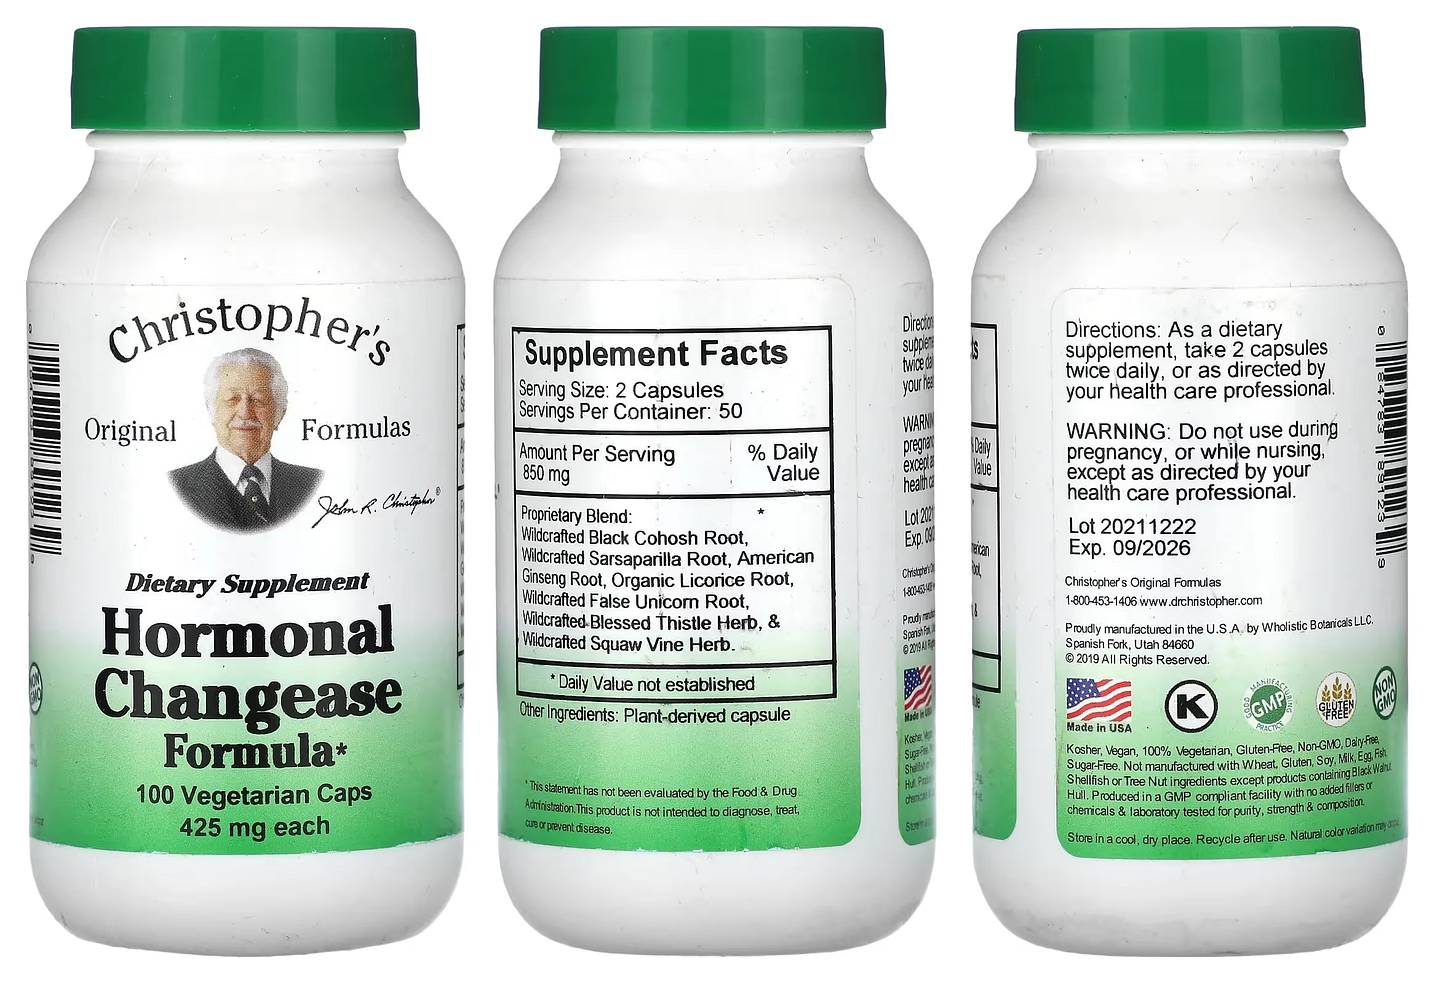 Dr. Christopher's, Hormonal Changease Formula packaging